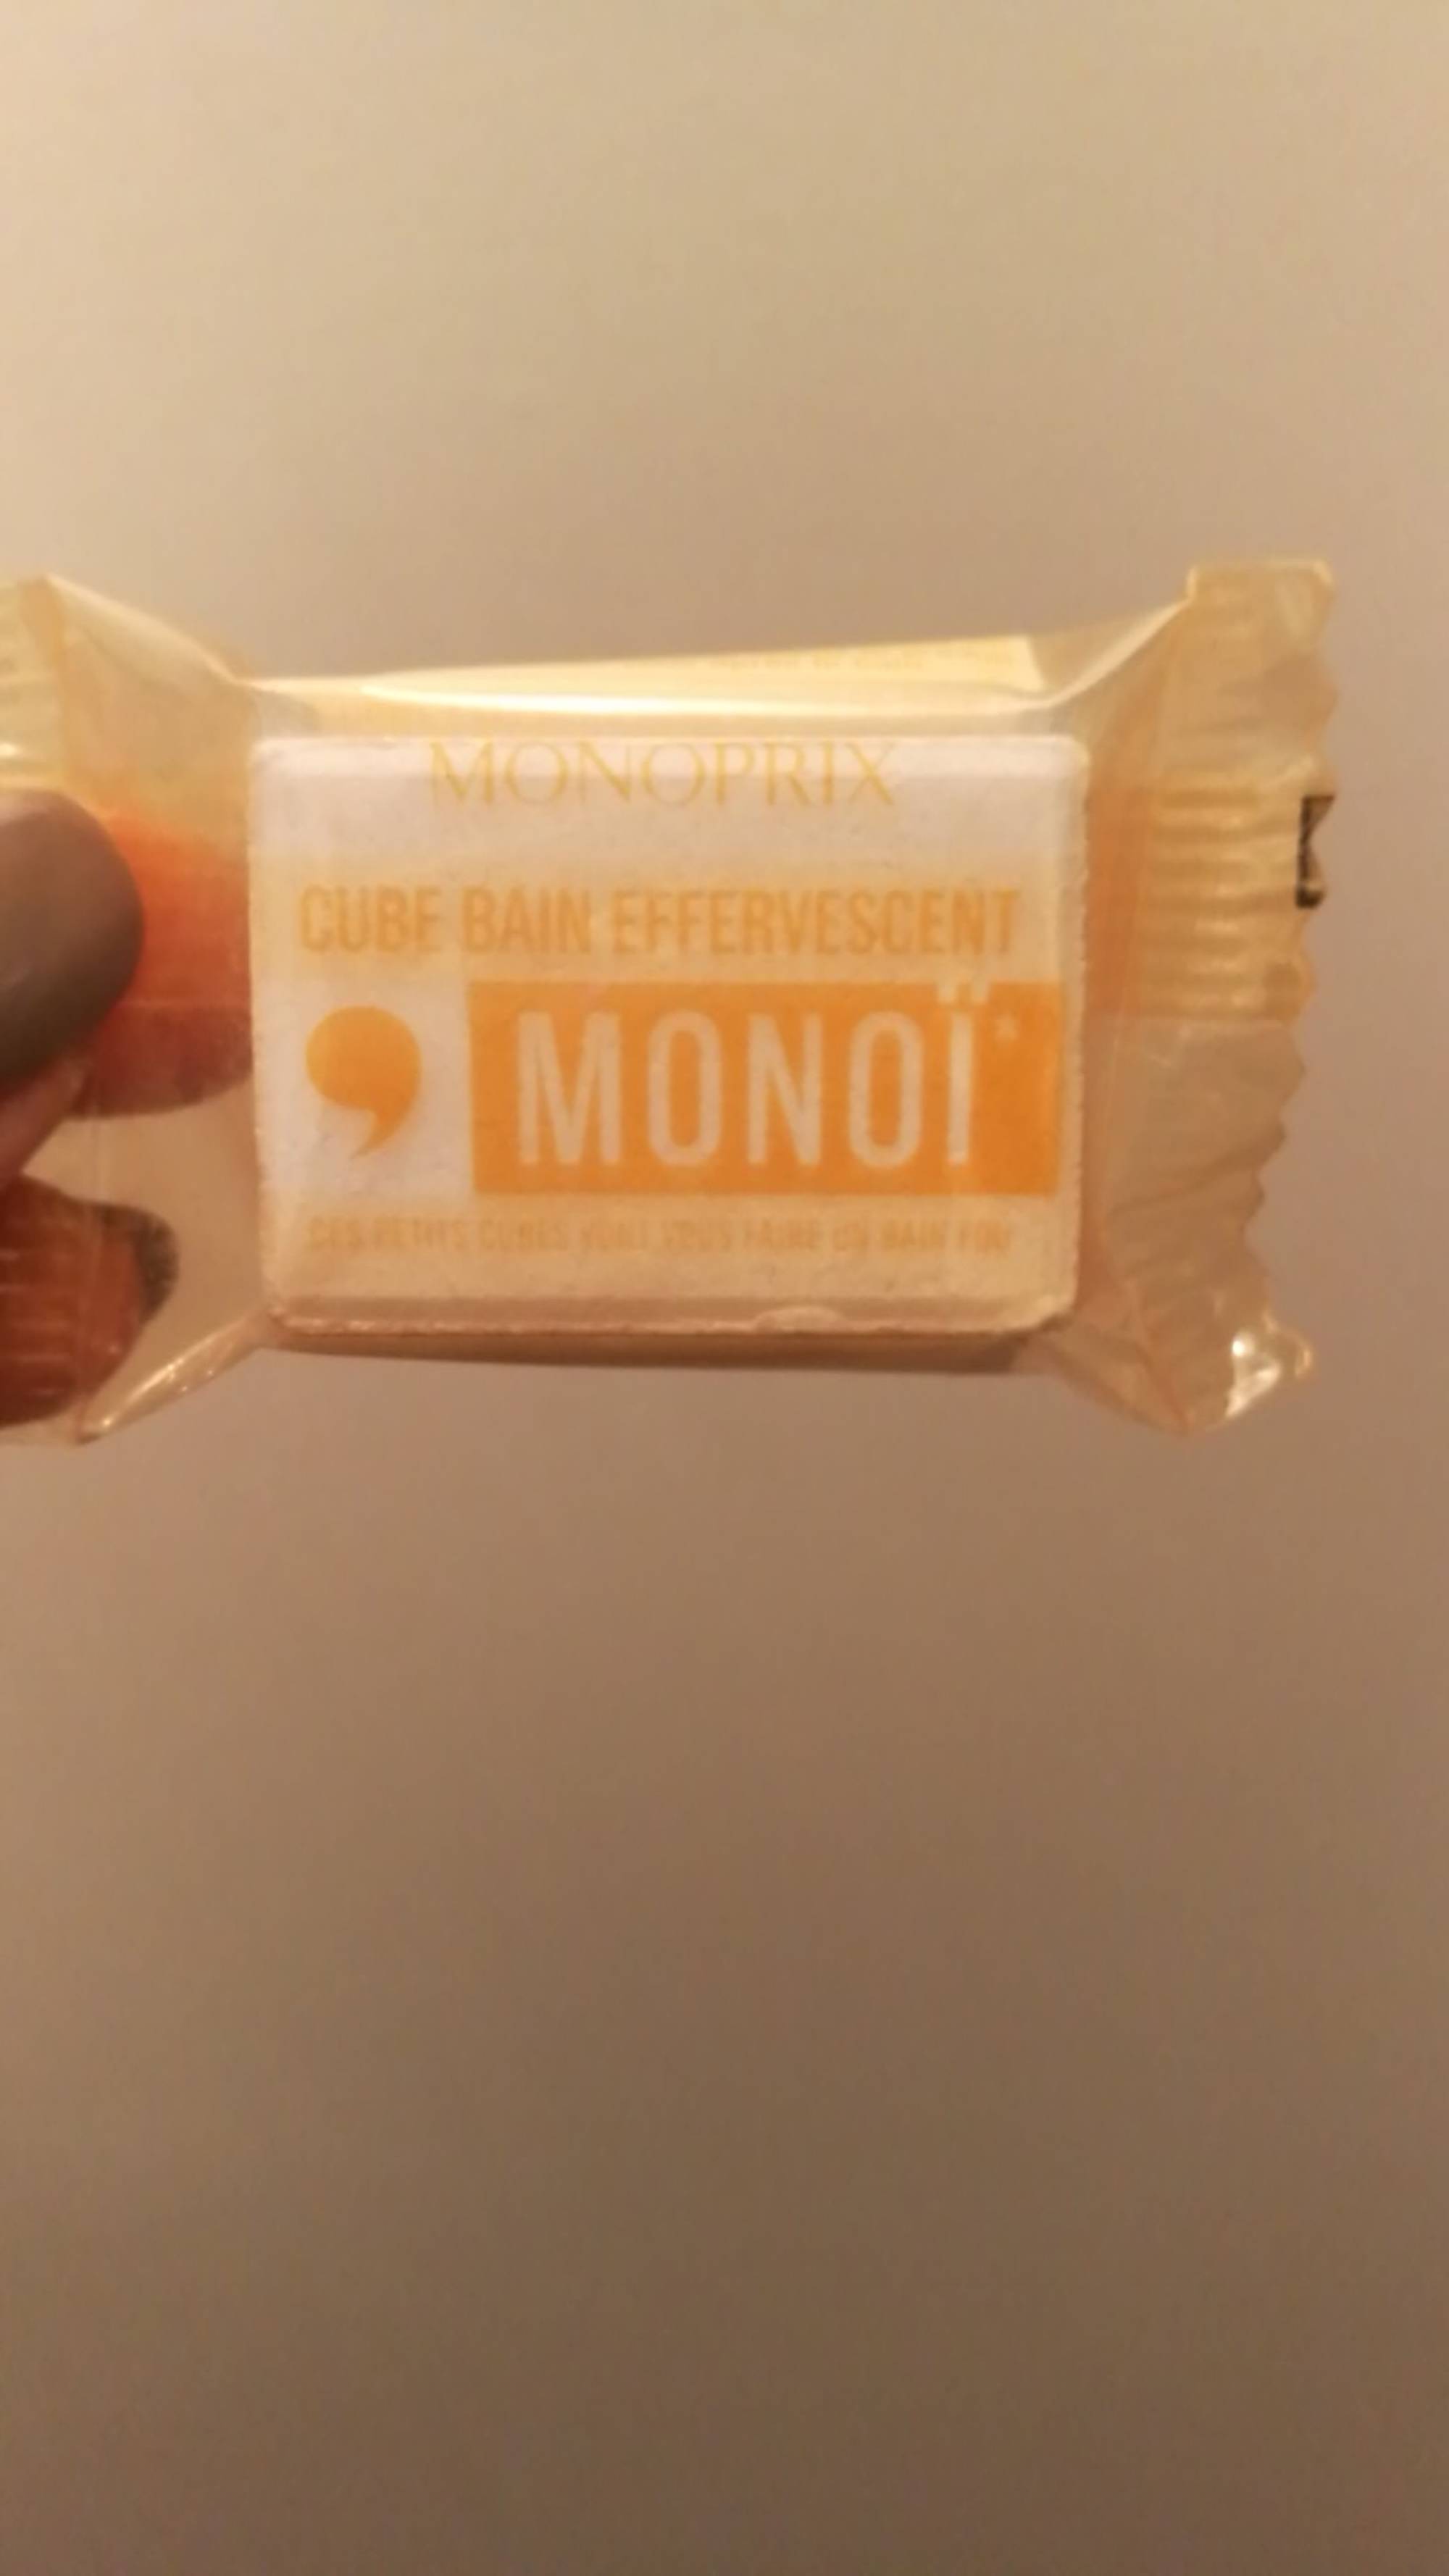 MONOPRIX - Cube bain effervescent monoï